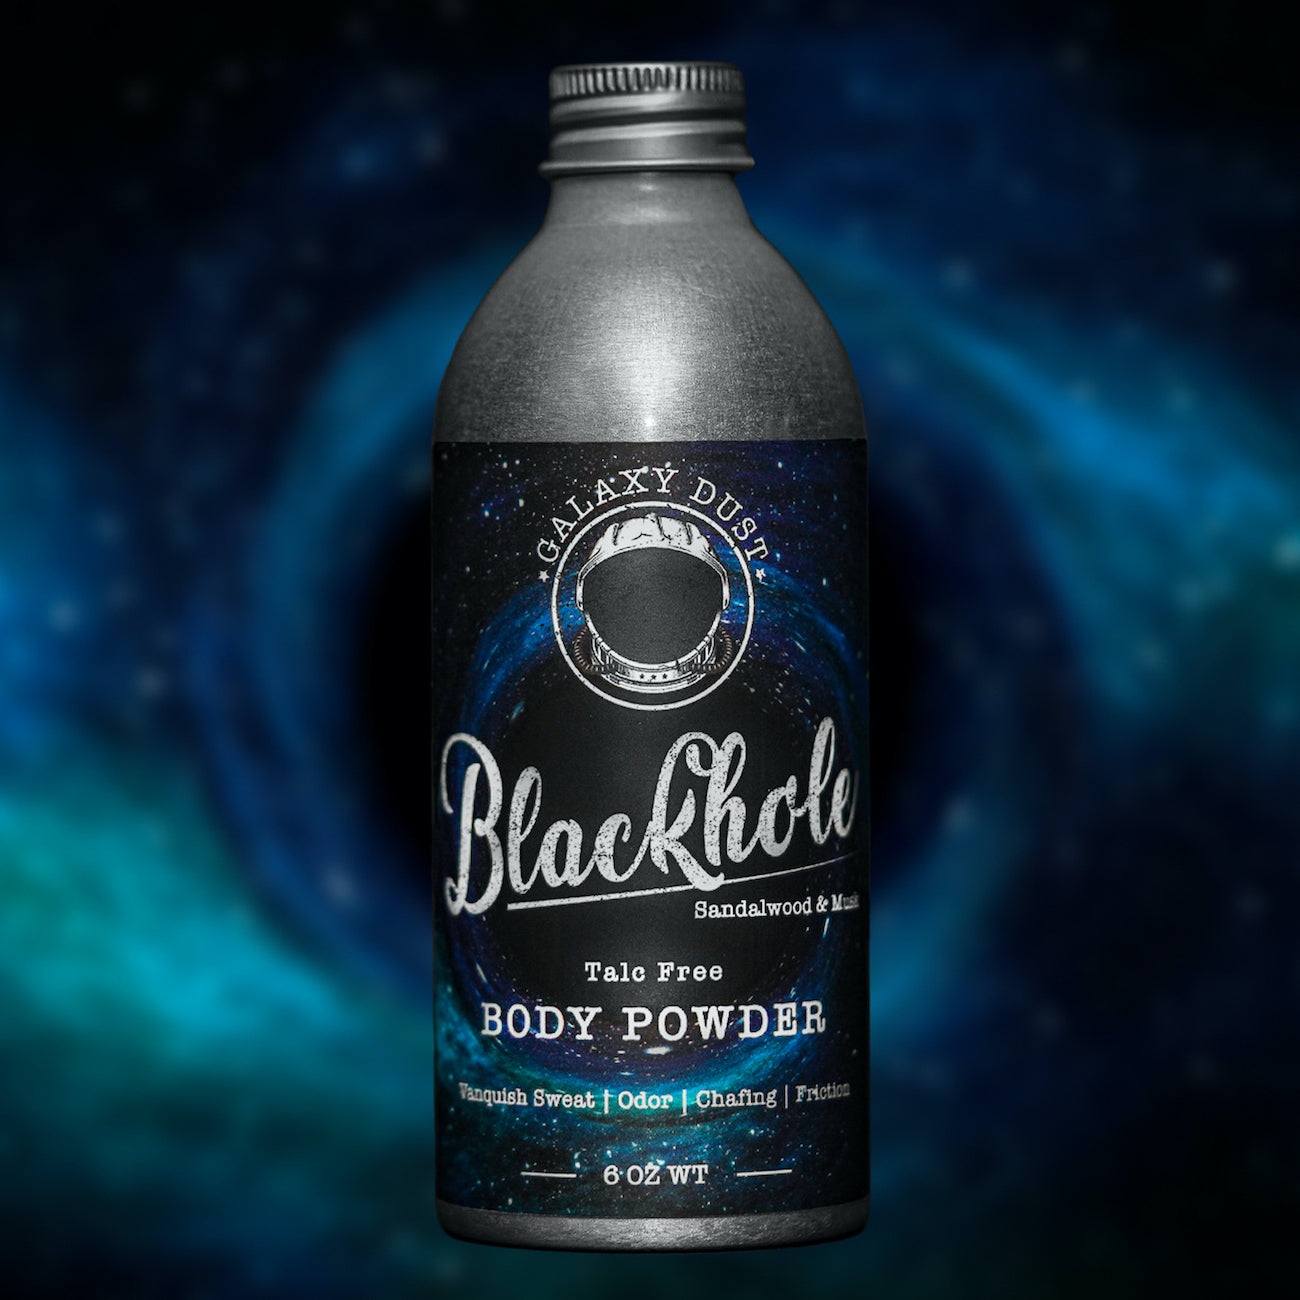 A bottle of Blackhole body powder for men